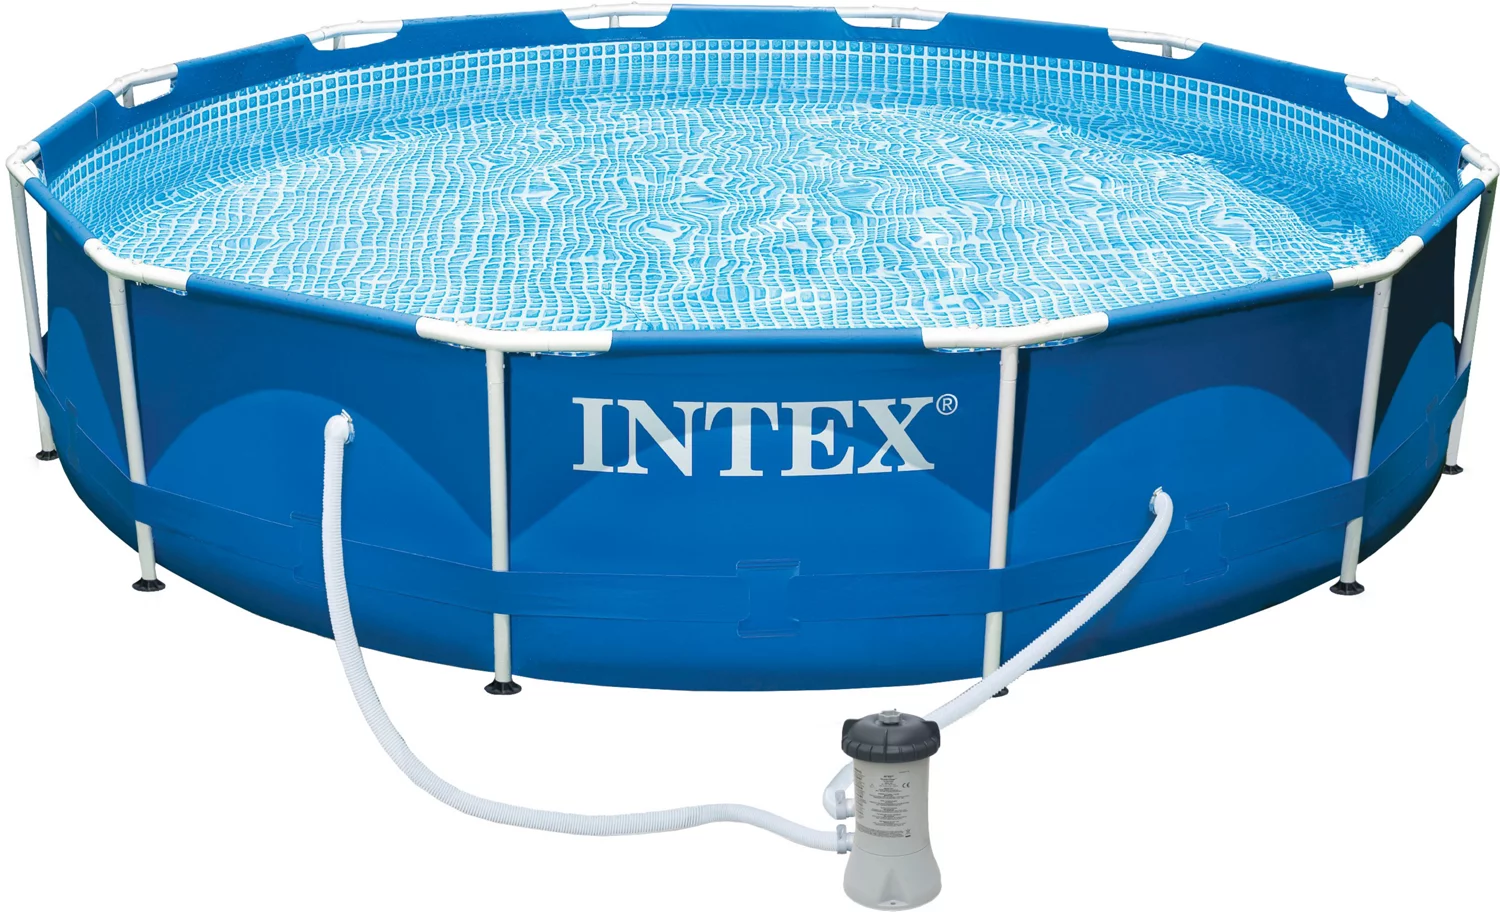 INTEX® 12' x 30" Round Metal Frame Pool Set with 530Gal